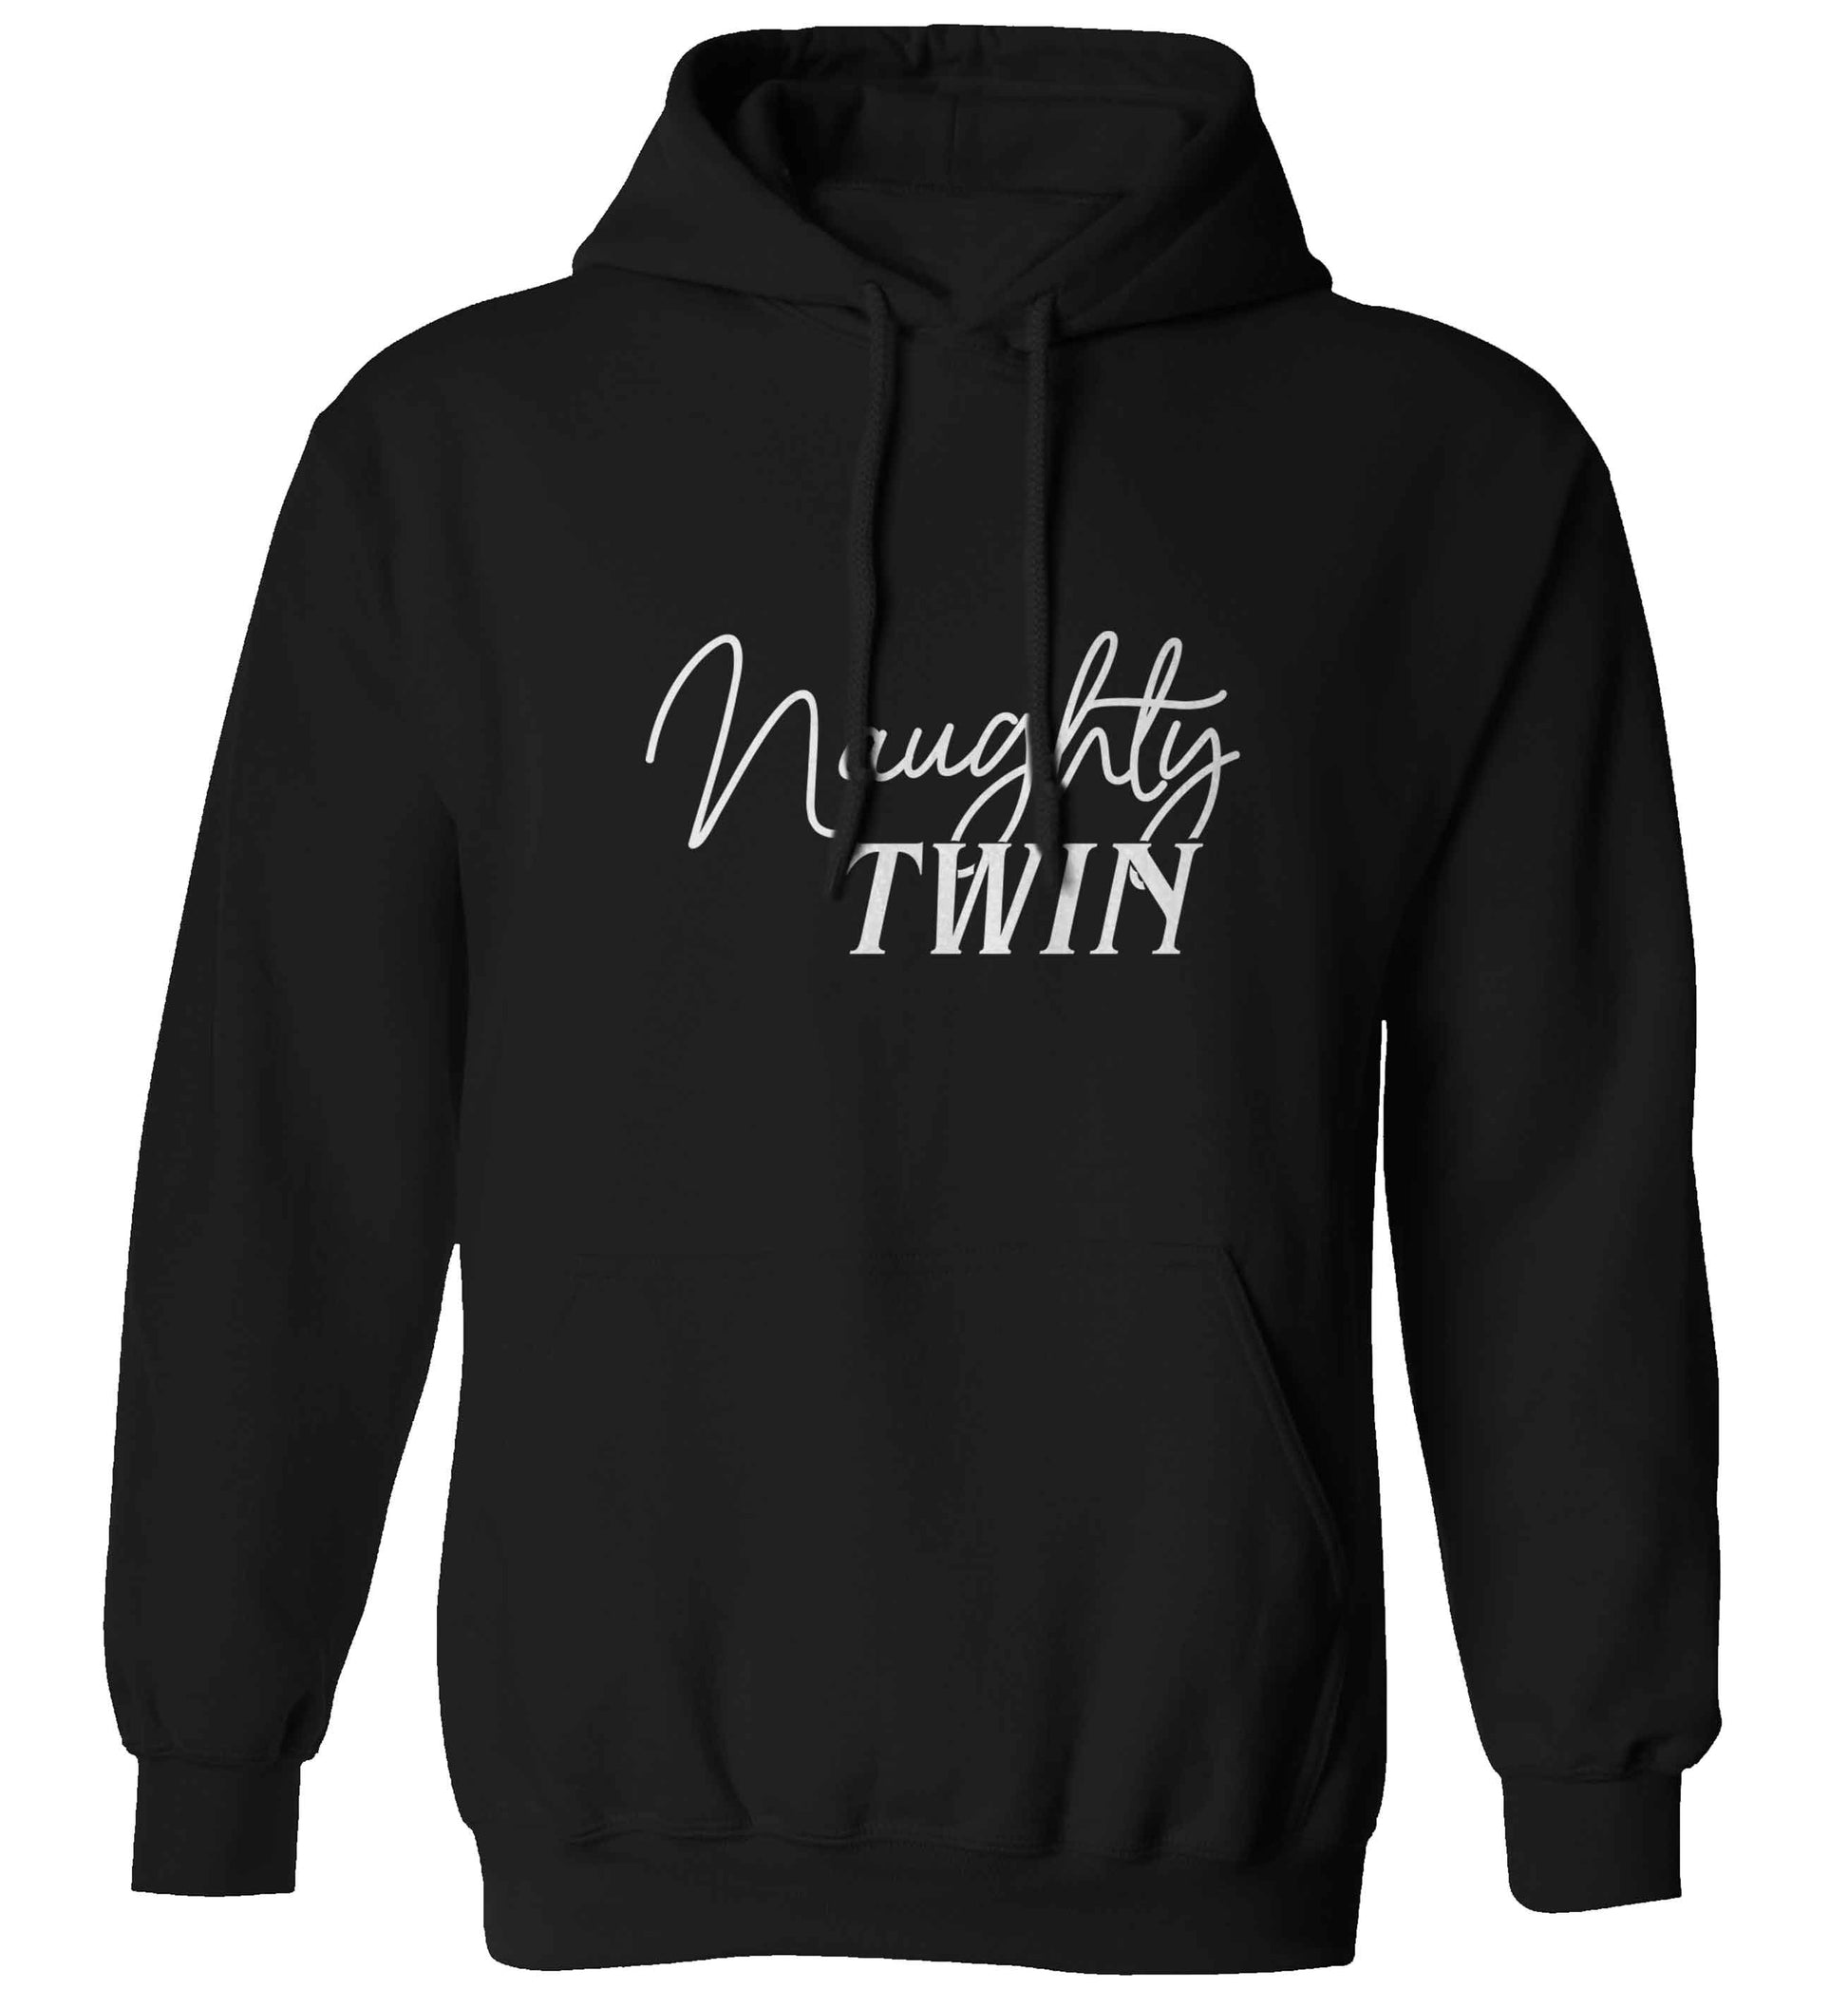 Naughty twin adults unisex black hoodie 2XL